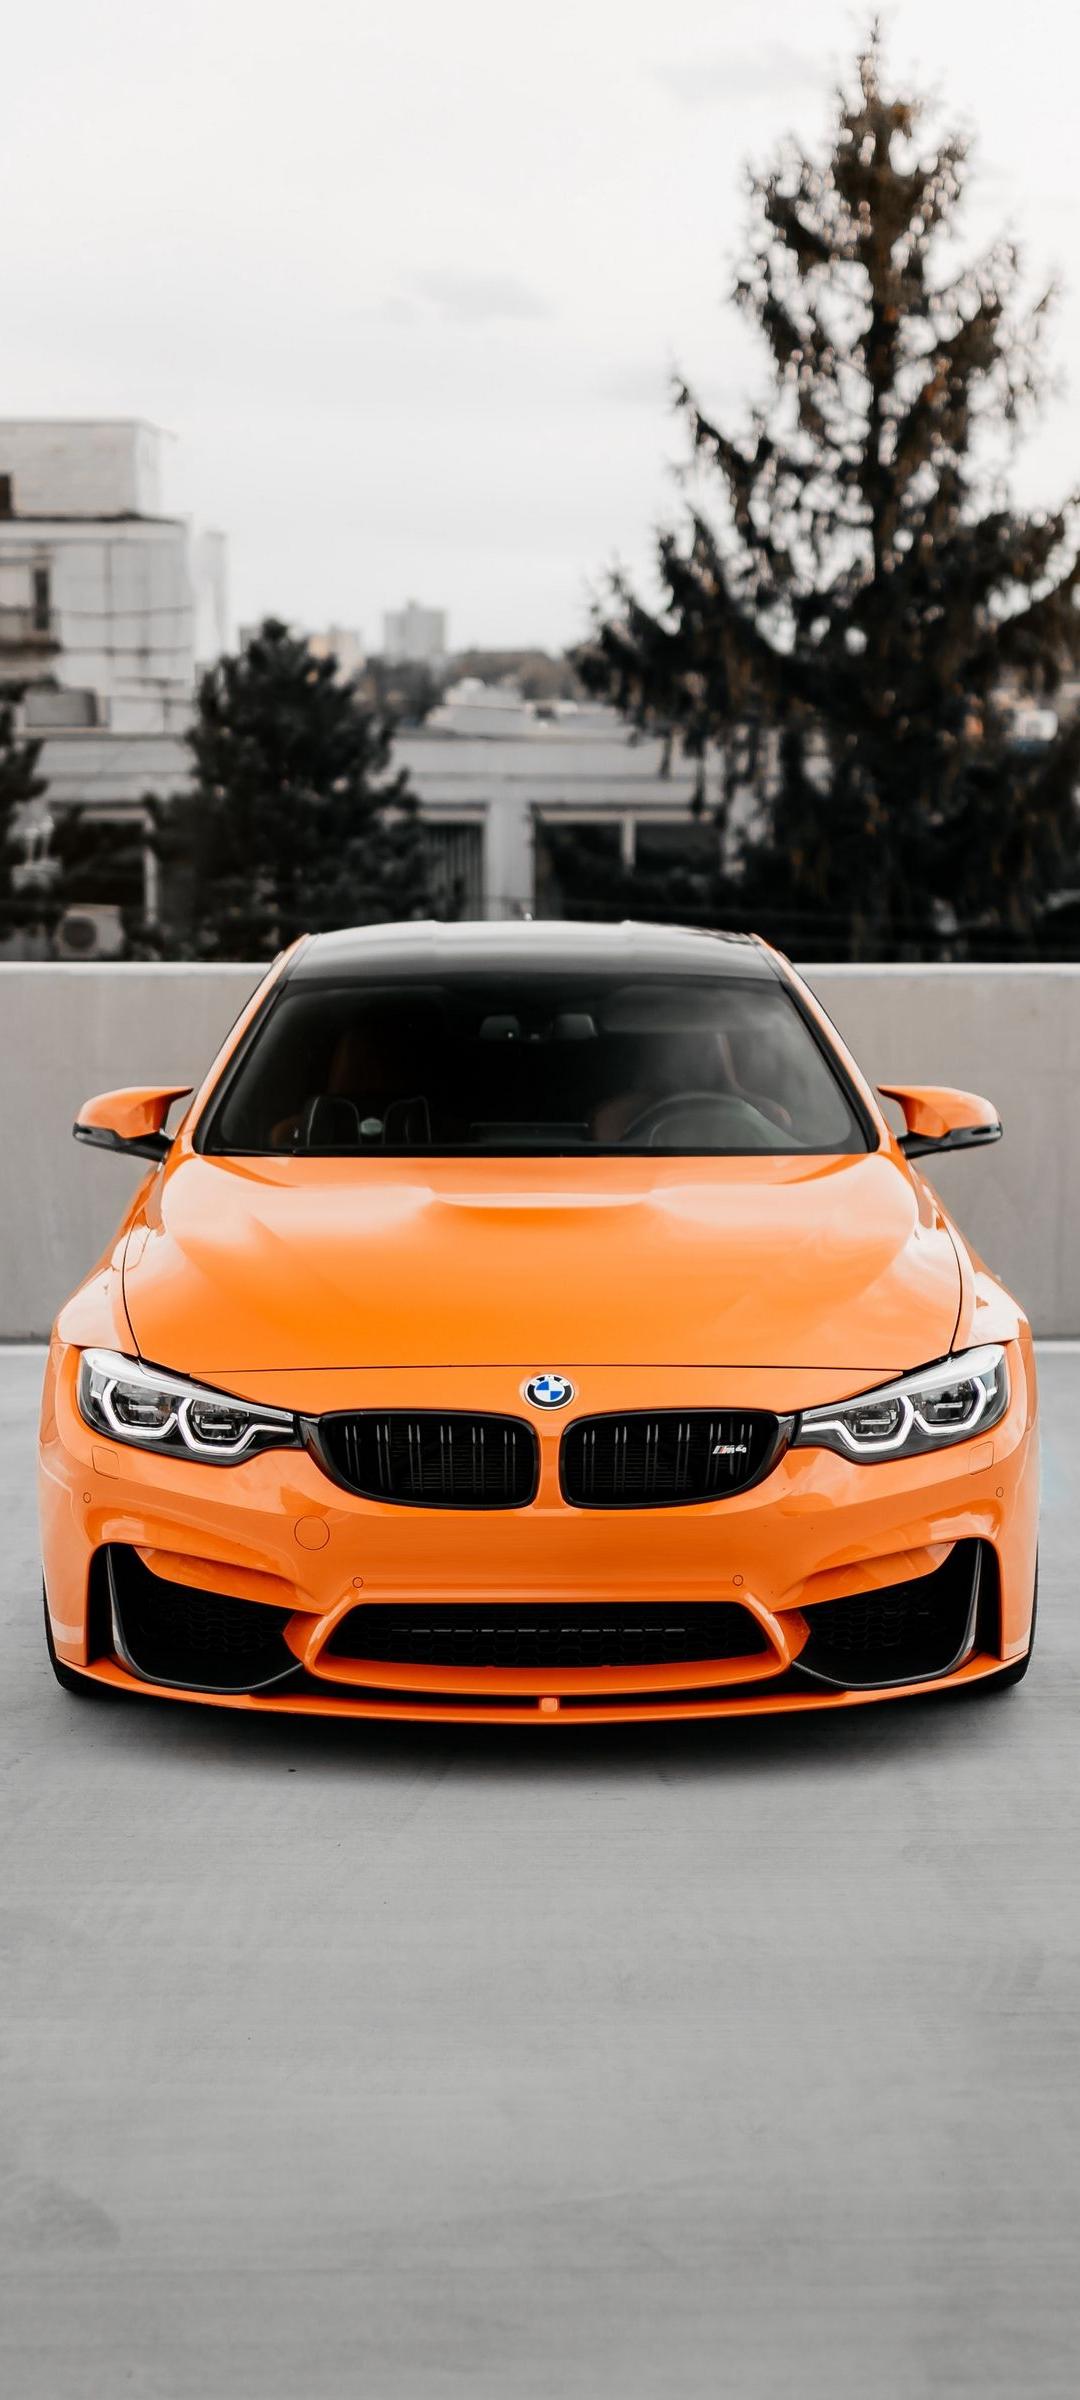 An orange bmw car is parked on a street - BMW